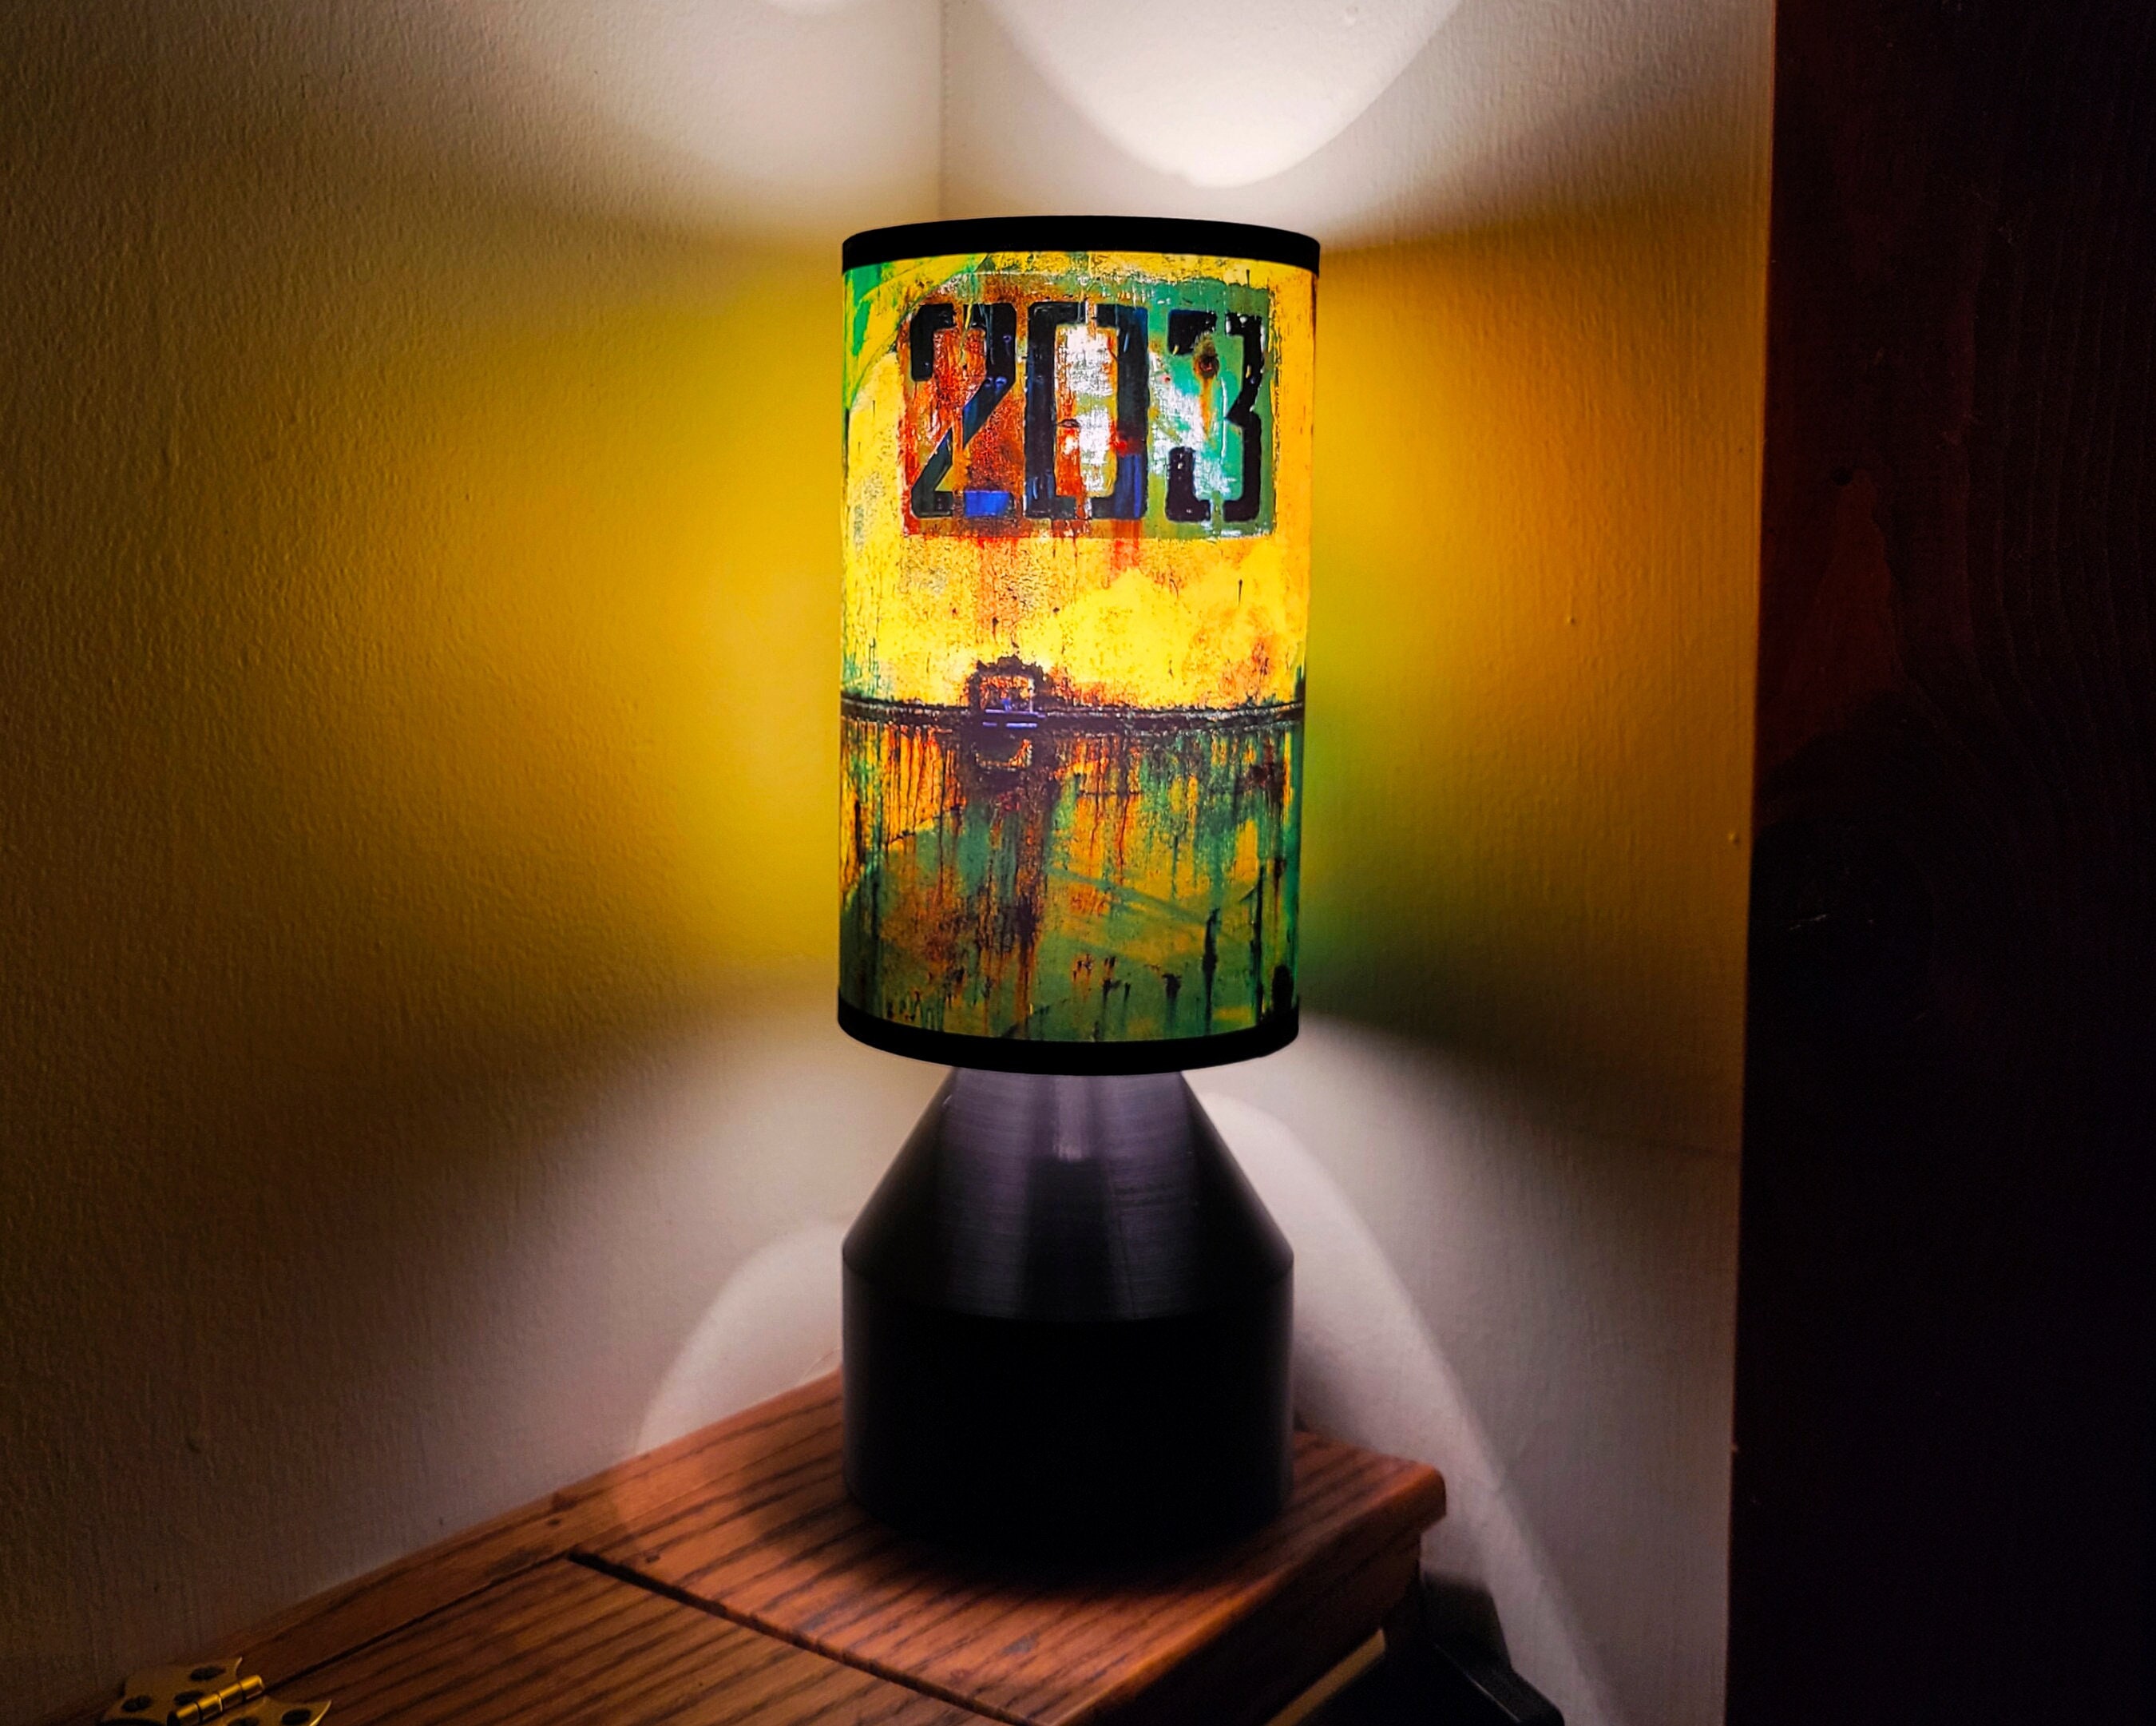 TV Walking Dead Zombies Desk Lamp VHS Bed Light Horror Movie Present Gift 